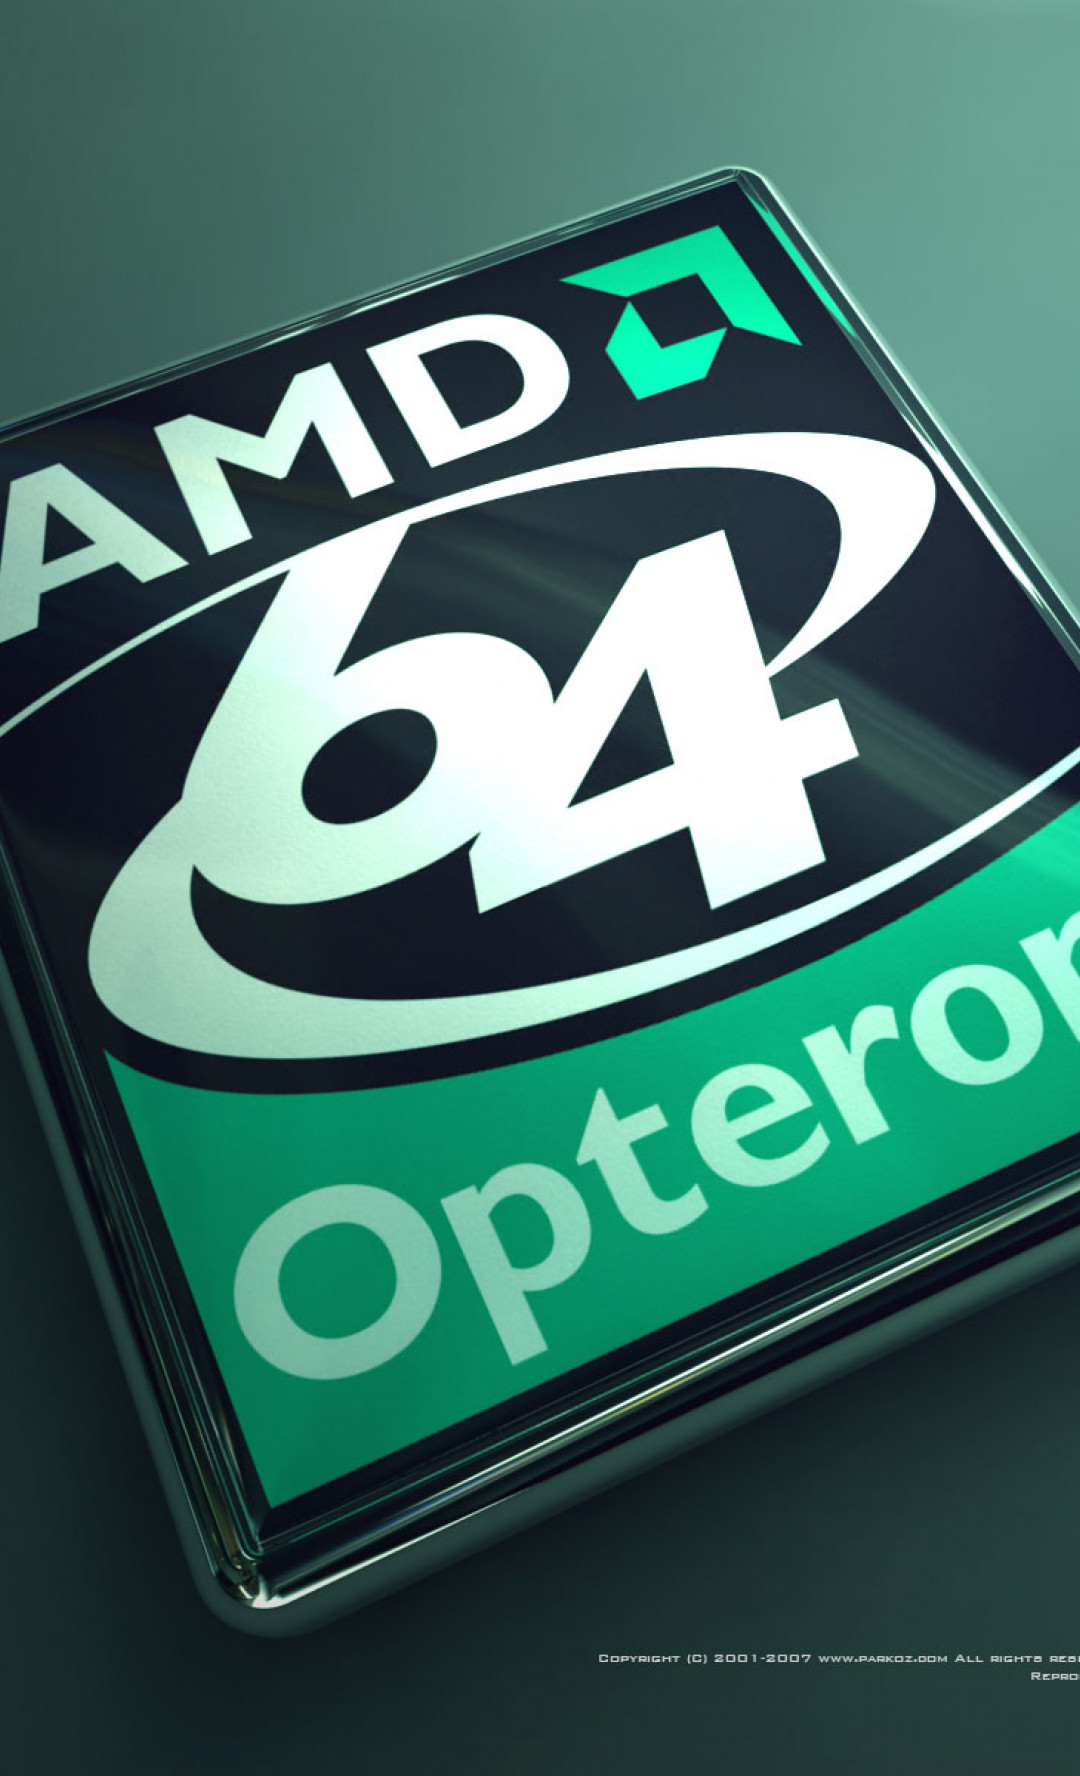 AMD 64 Opteron.jpg